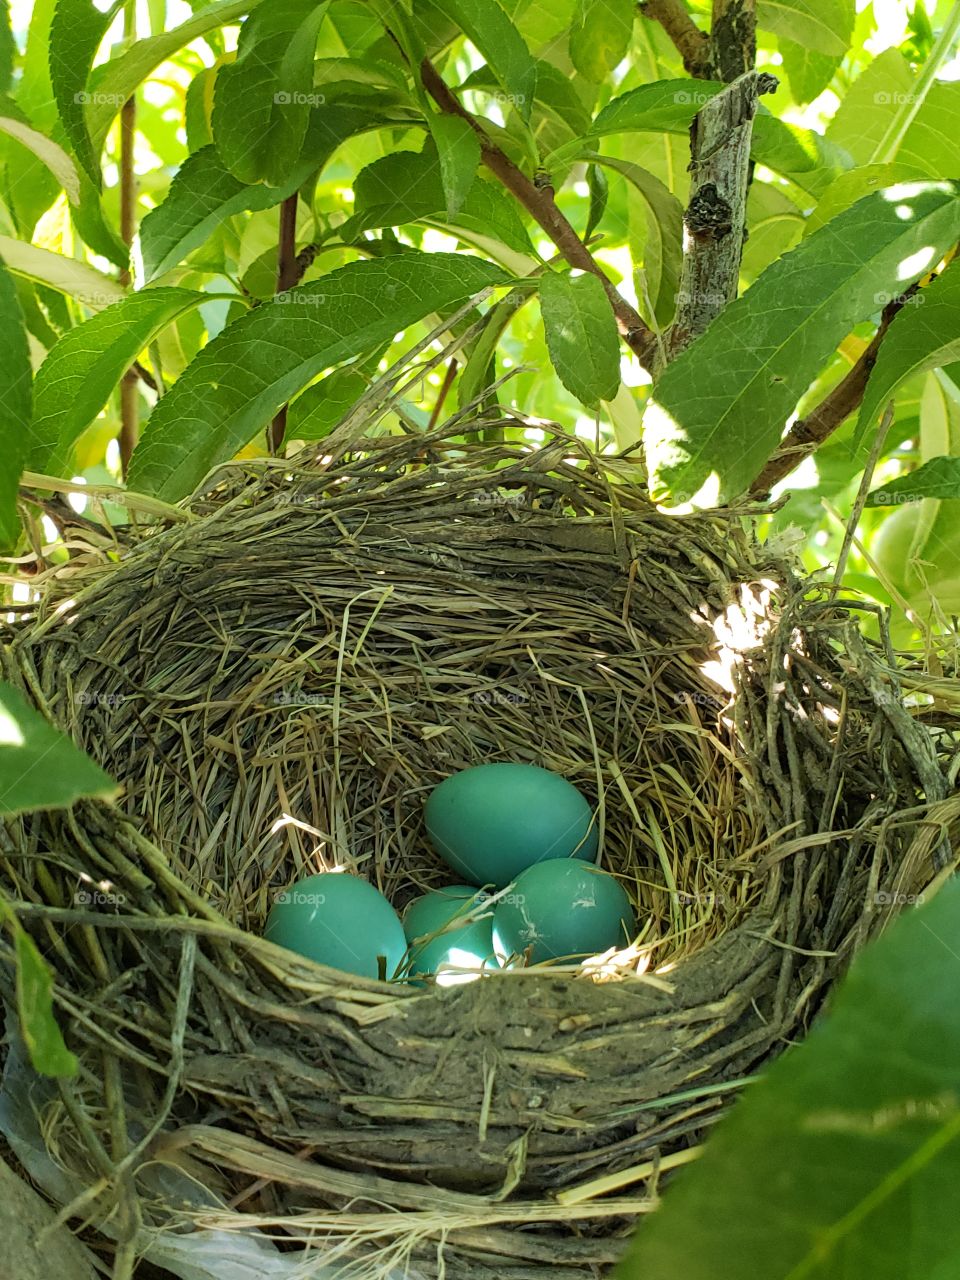 Birds nest in the garden